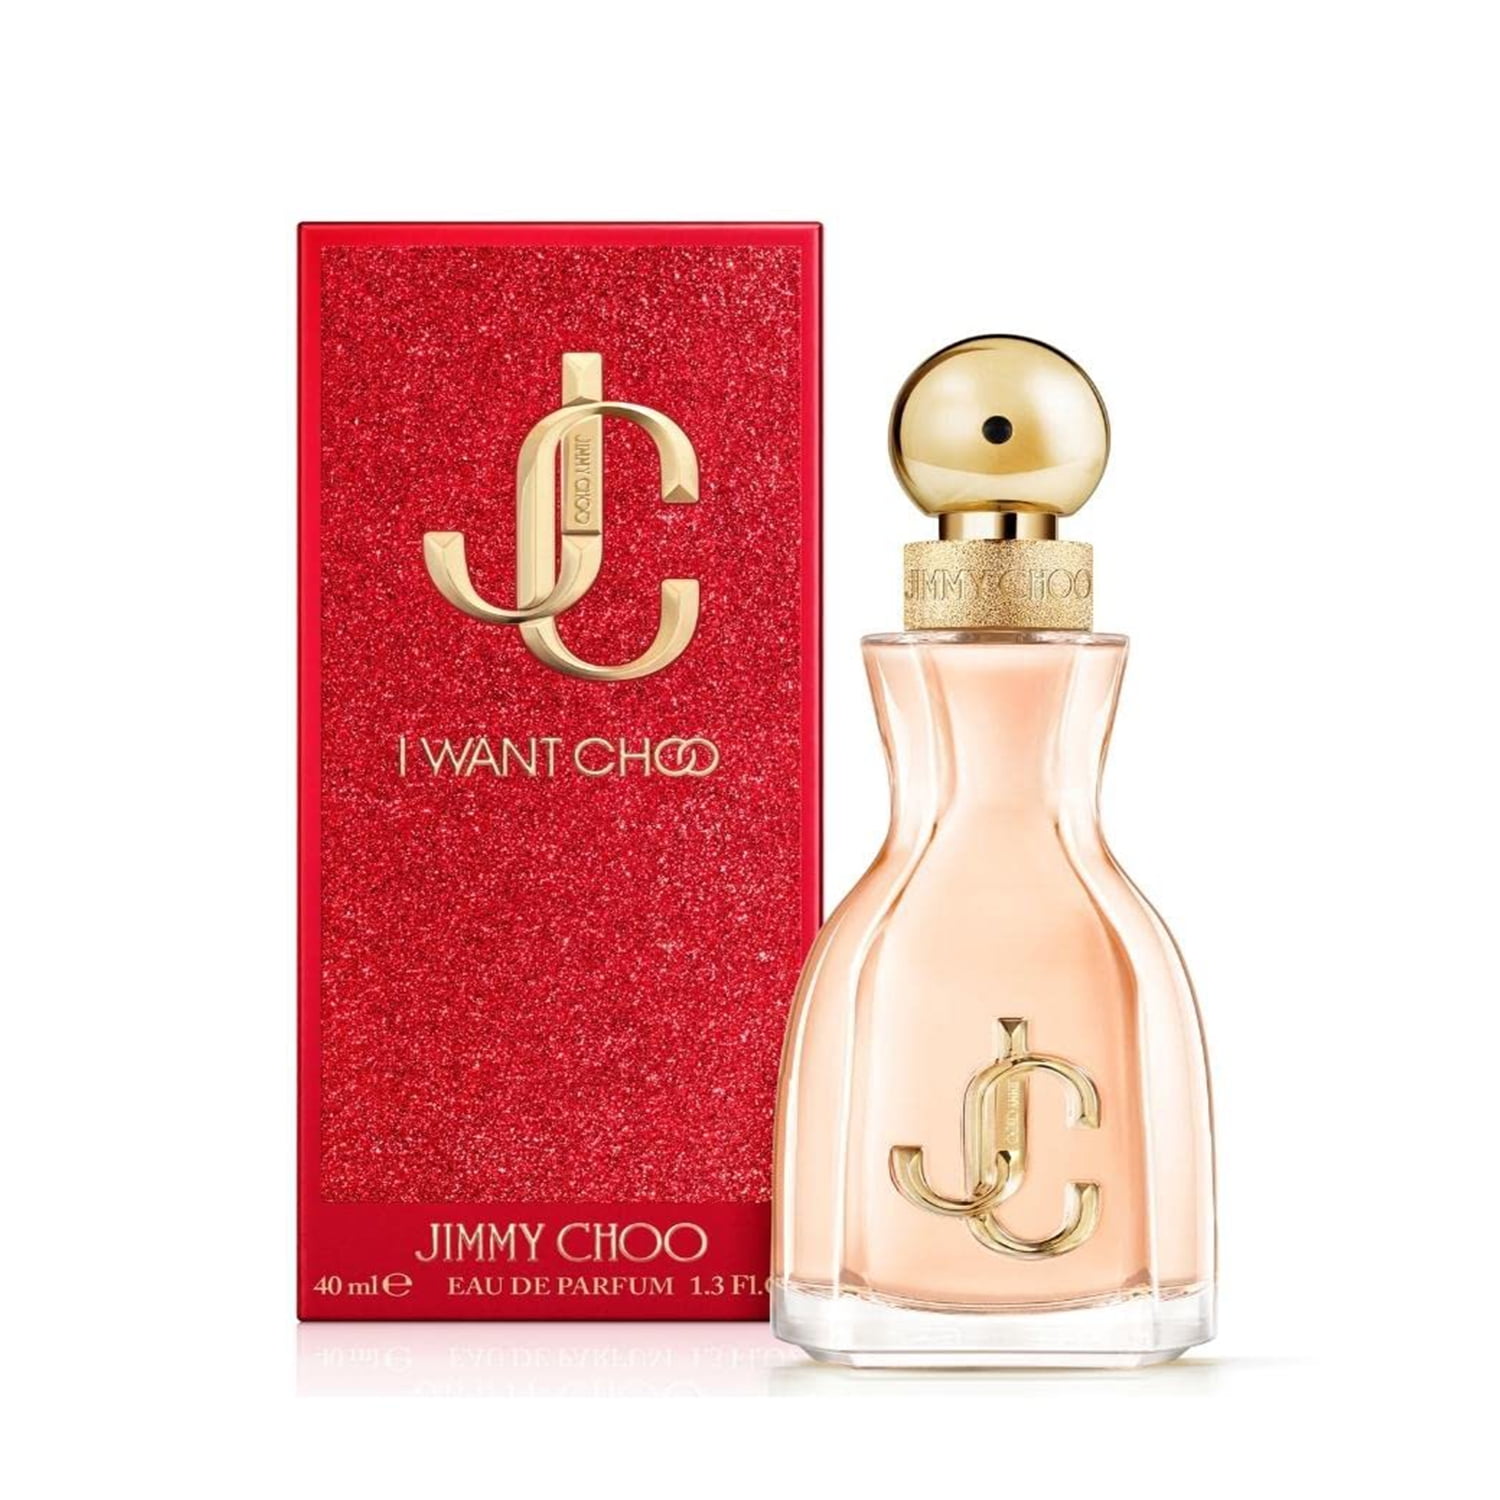 Louis Vuitton Fragrance Spell On You 3.4 oz. EDP Shopping Bag New Box  Receipt